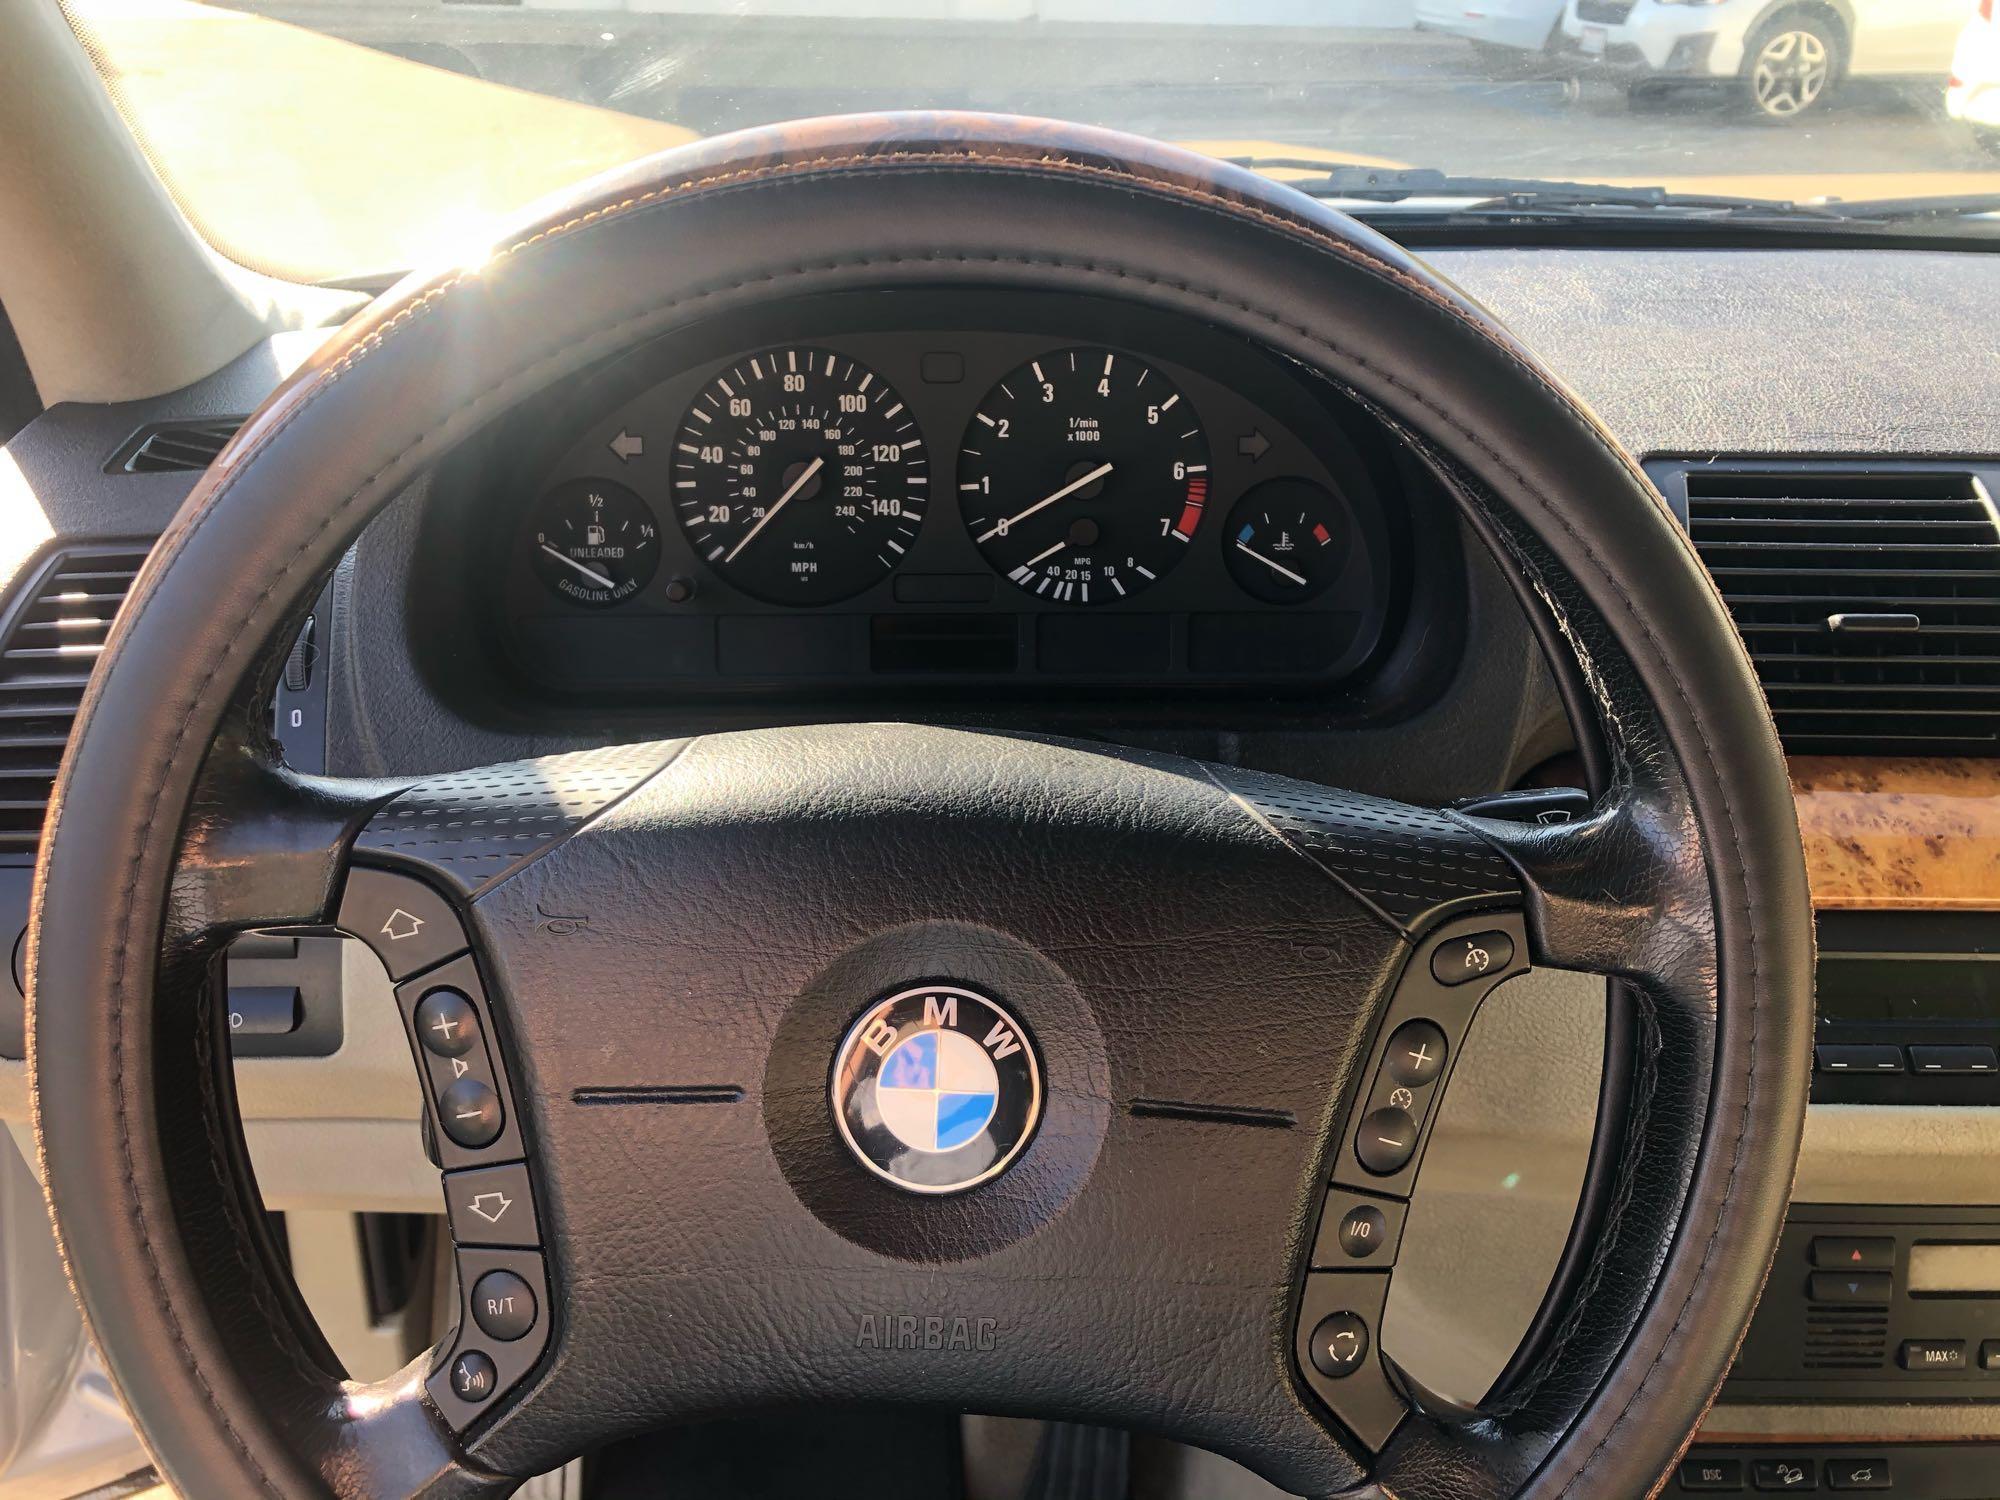 2001 BMW x5 3.0i SUV 200000 Miles